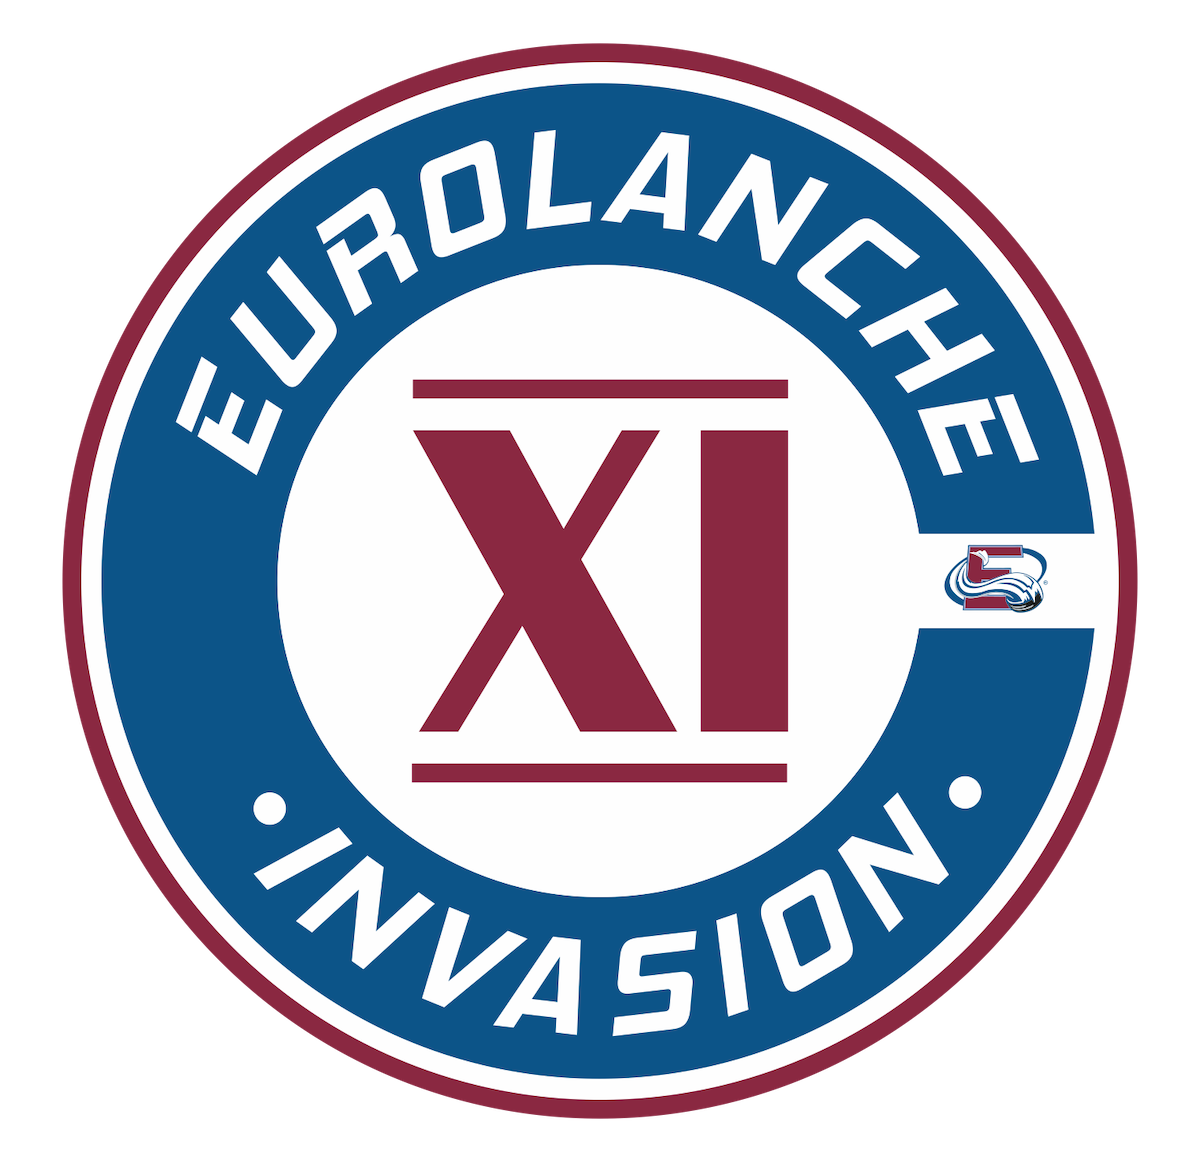 Gallery: Eurolanche Invasion XI 2018/19